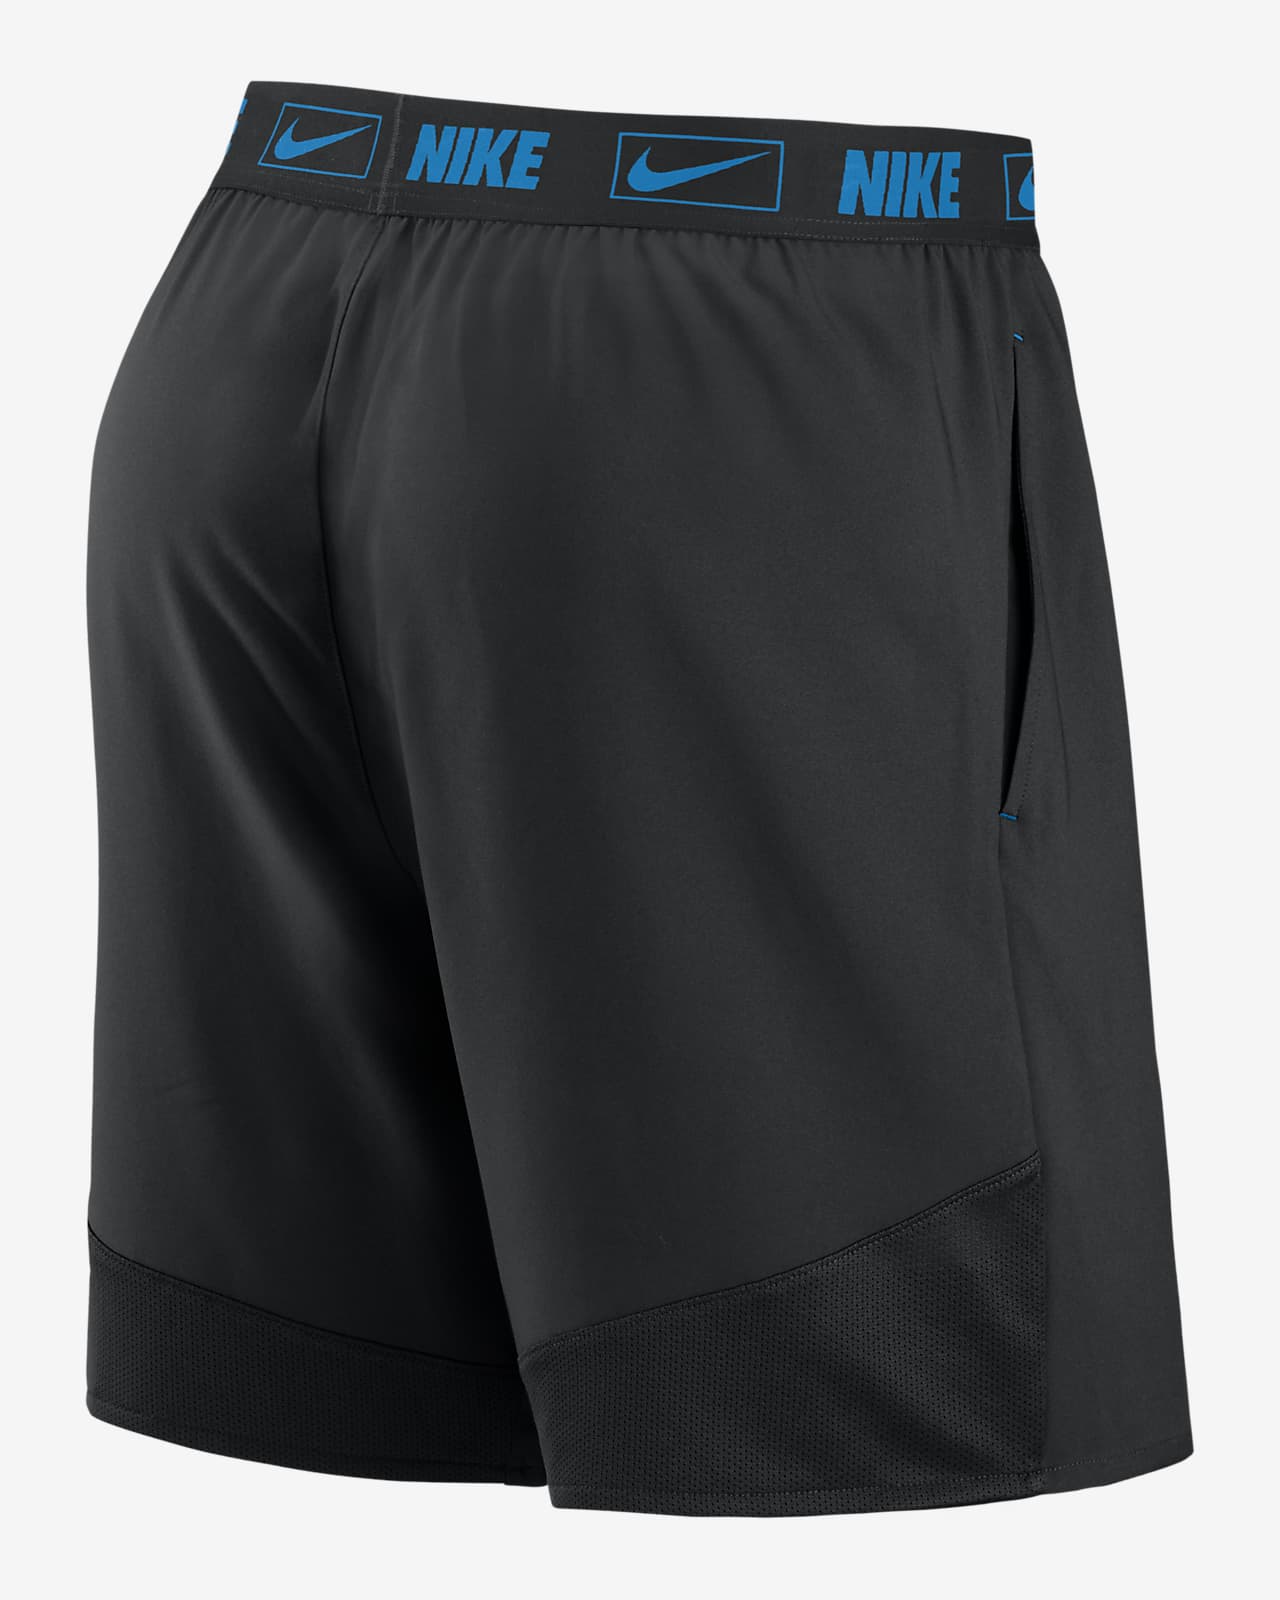 Nike Dri-FIT Primetime Logo (MLB Miami Marlins) Men's Shorts.